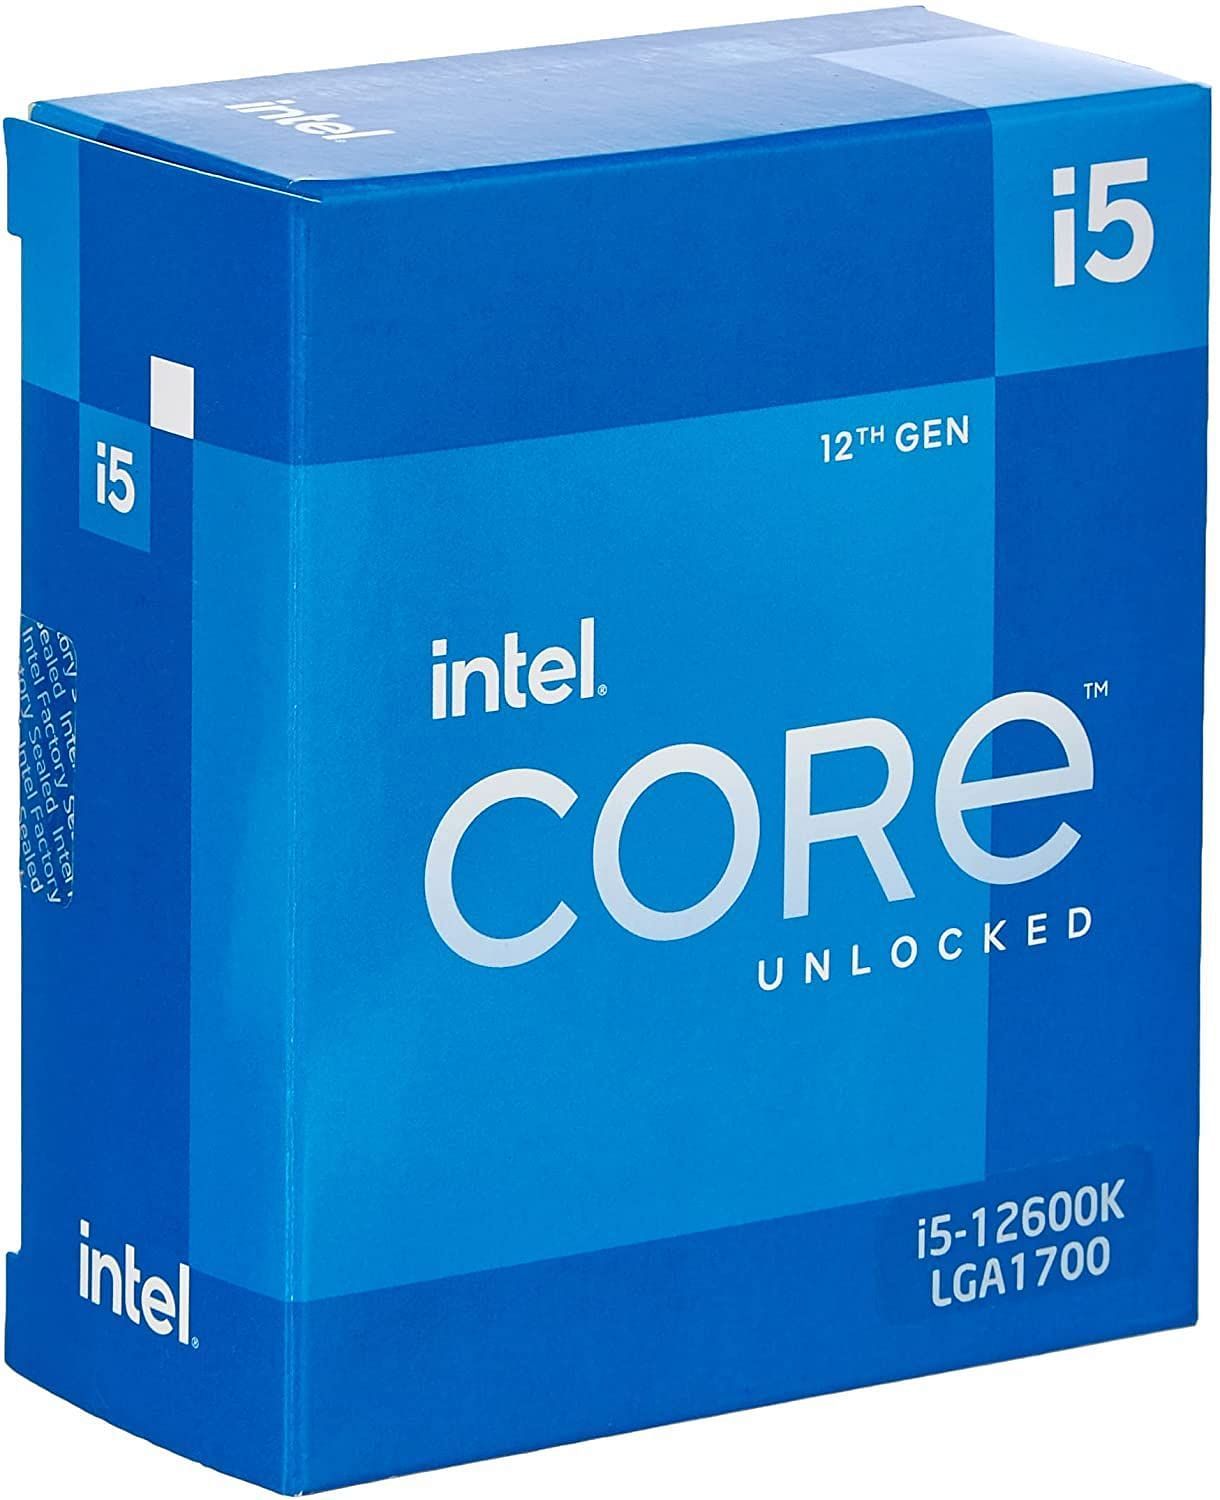 Intel Core i5-12600k (Image via Amazon)